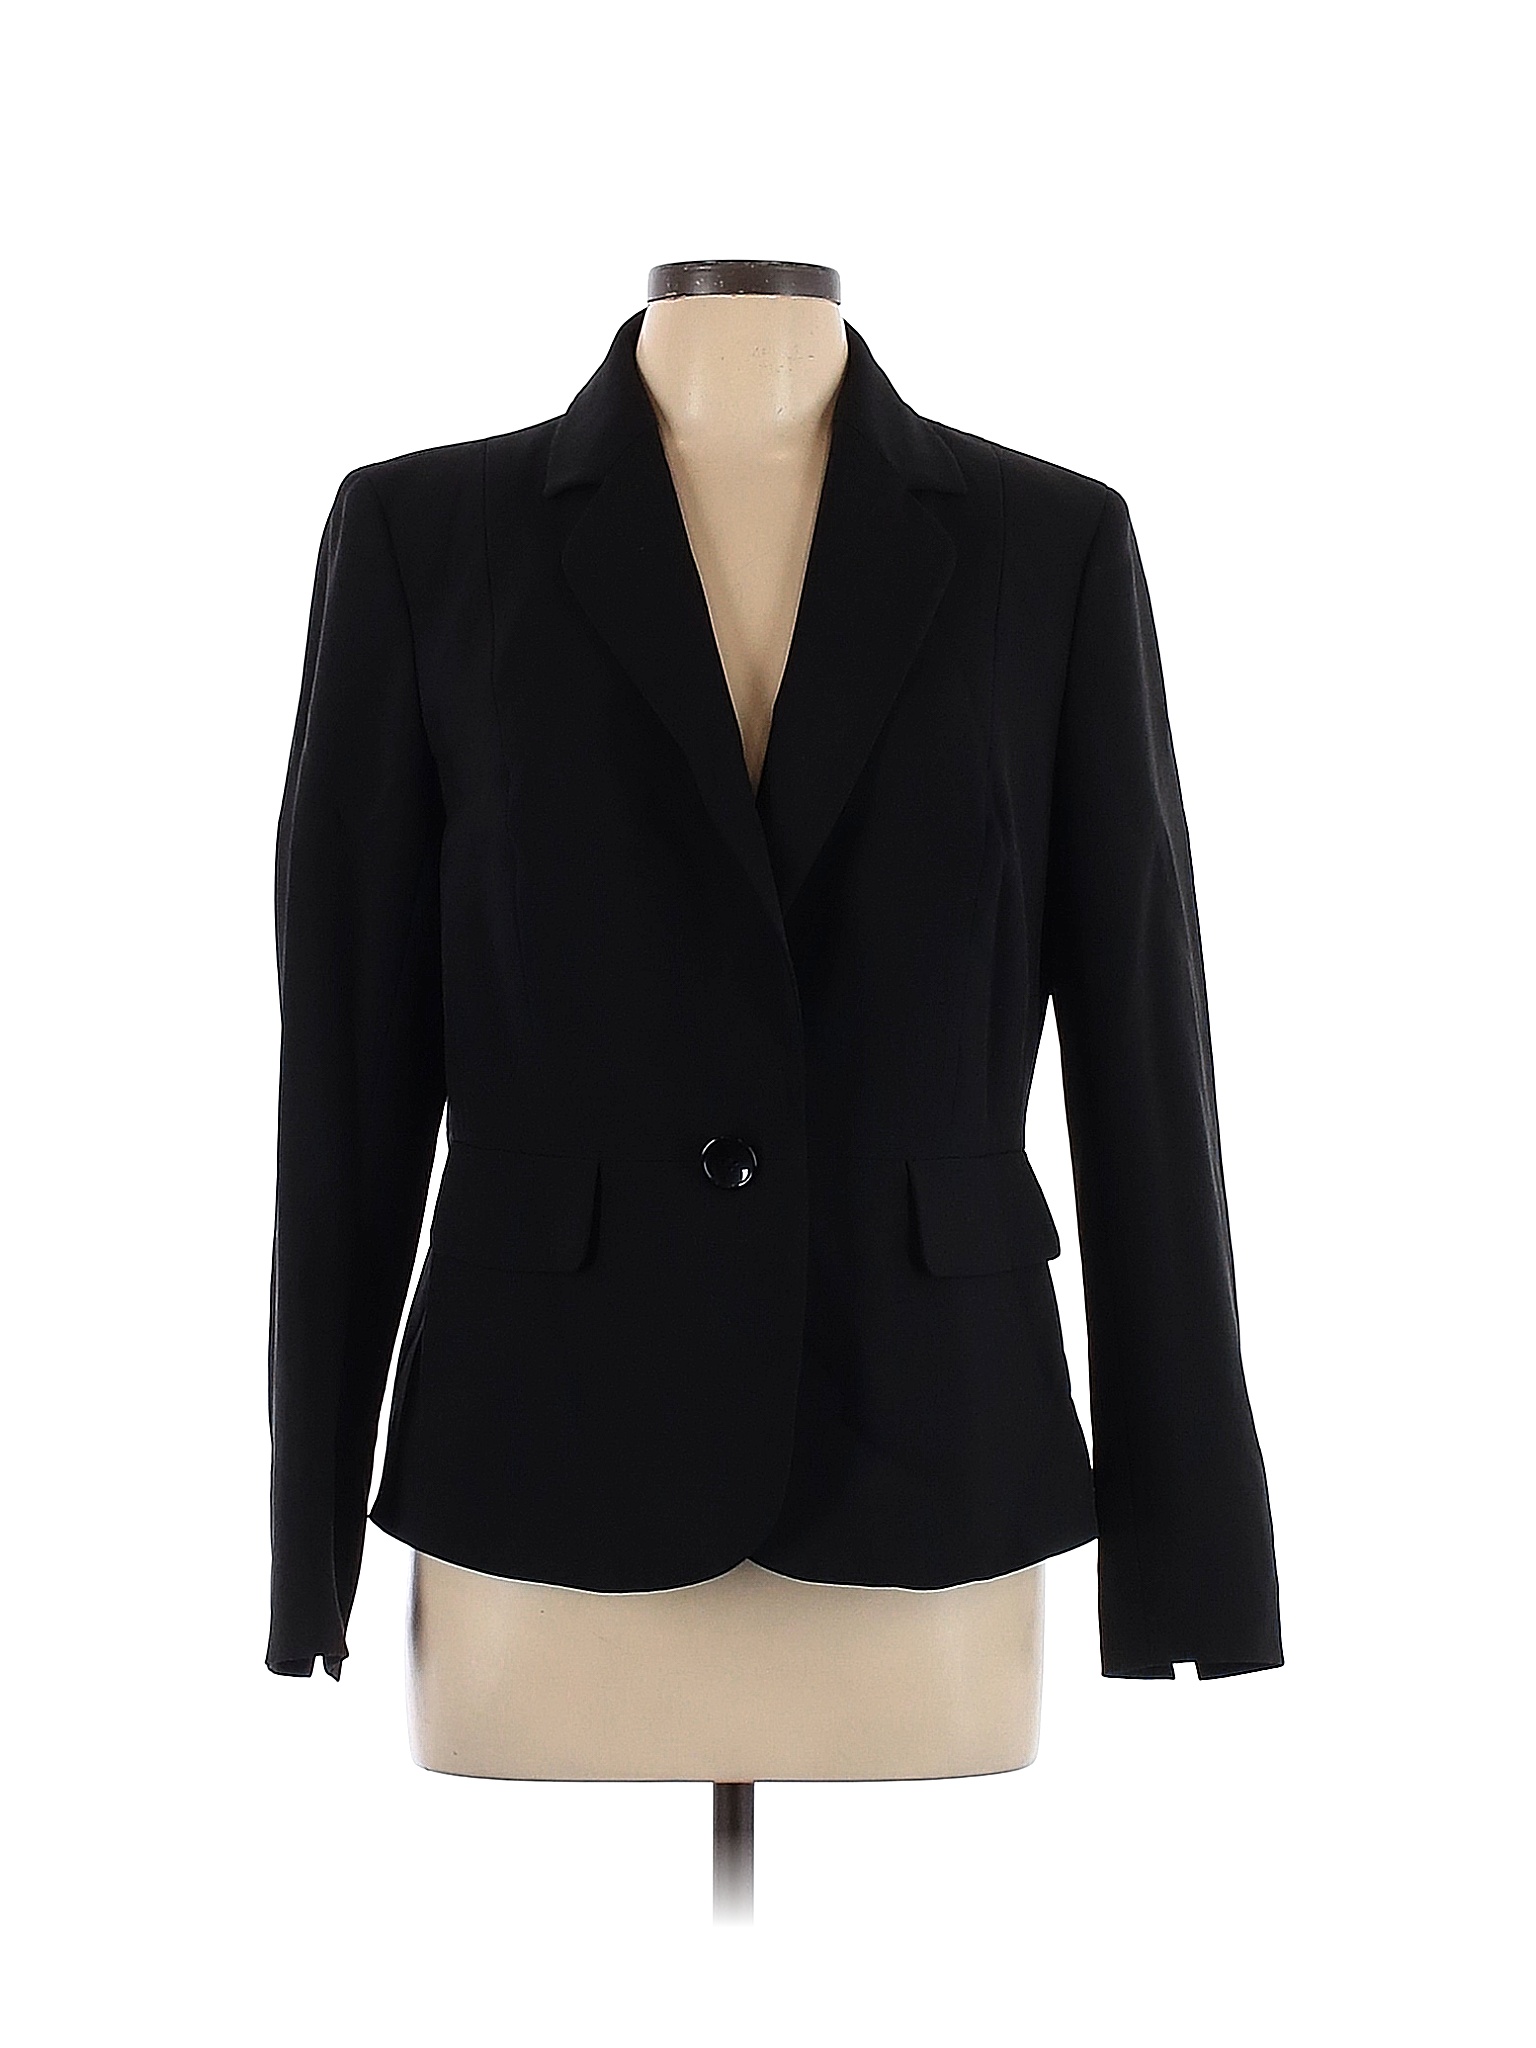 Le Suit Solid Black Blazer Size 10 - 88% off | thredUP